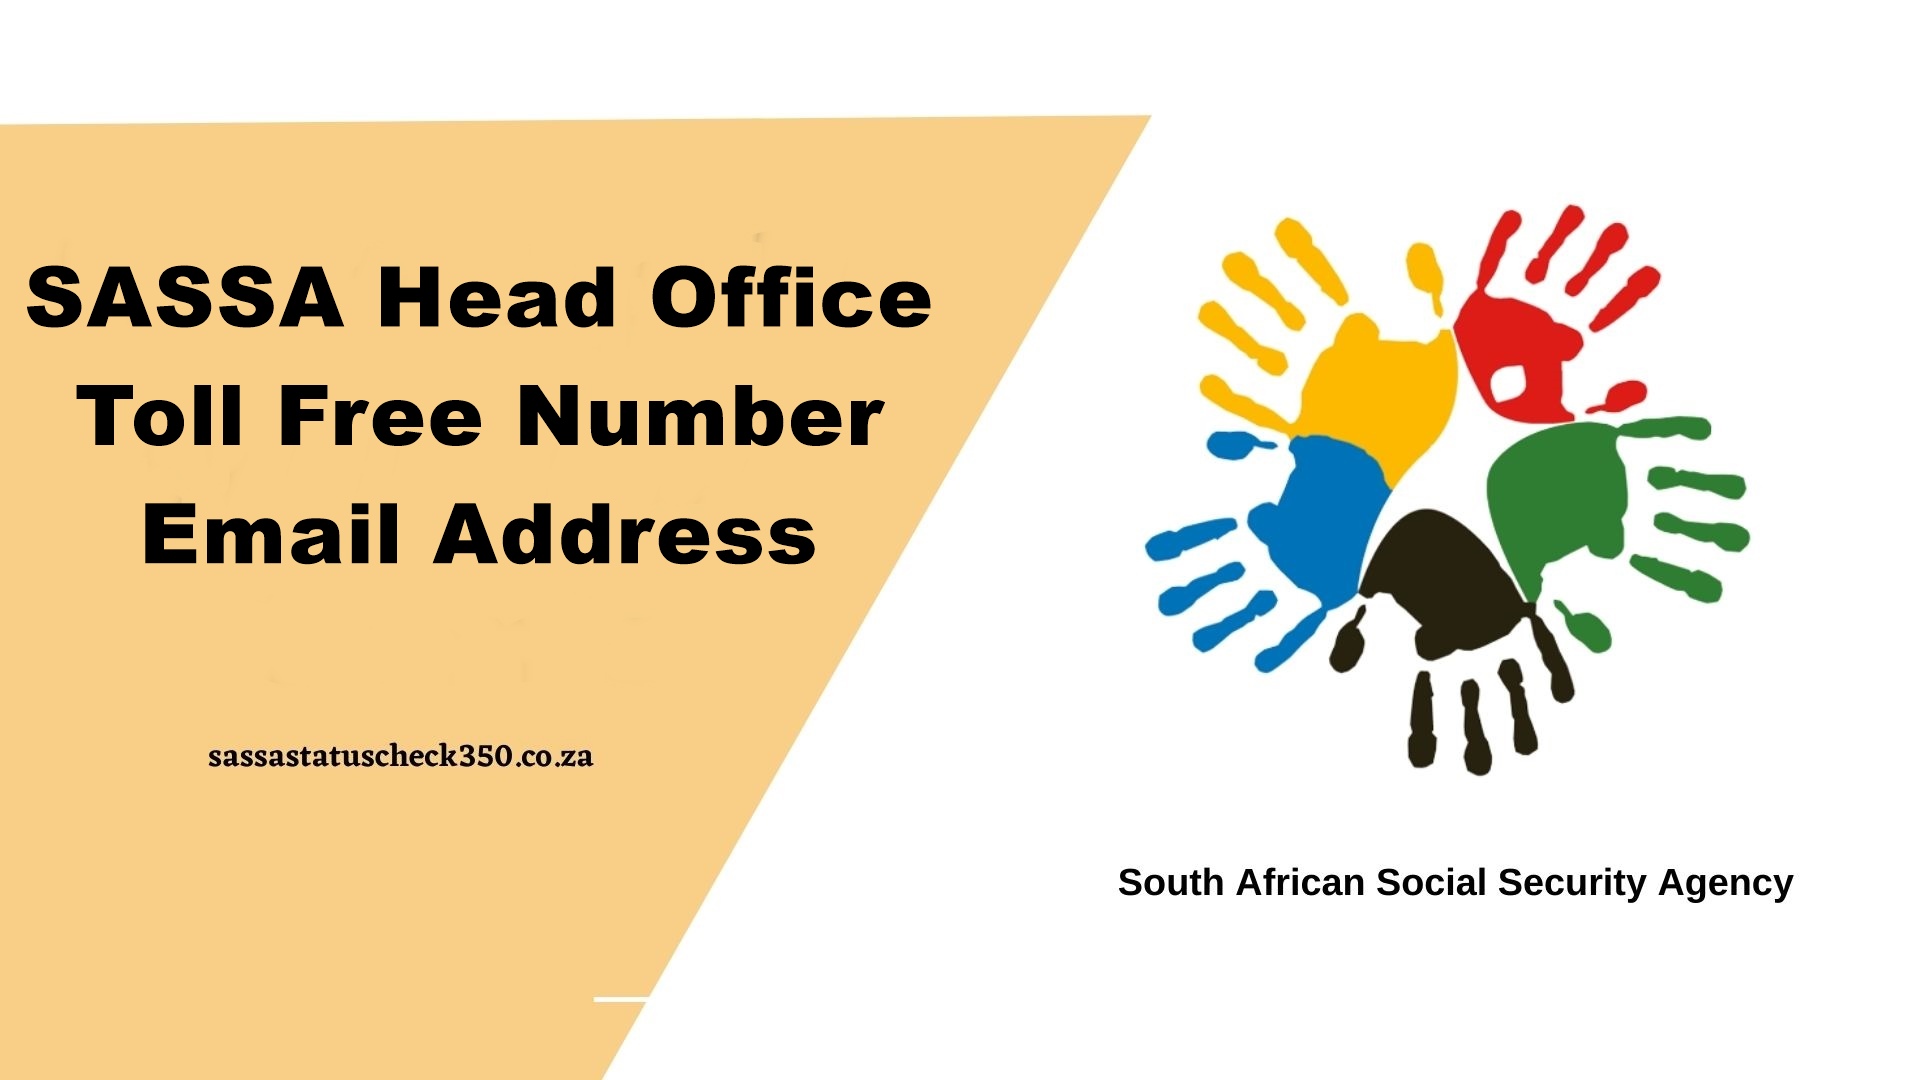 SASSA Head Office Toll Free Number & Email Address